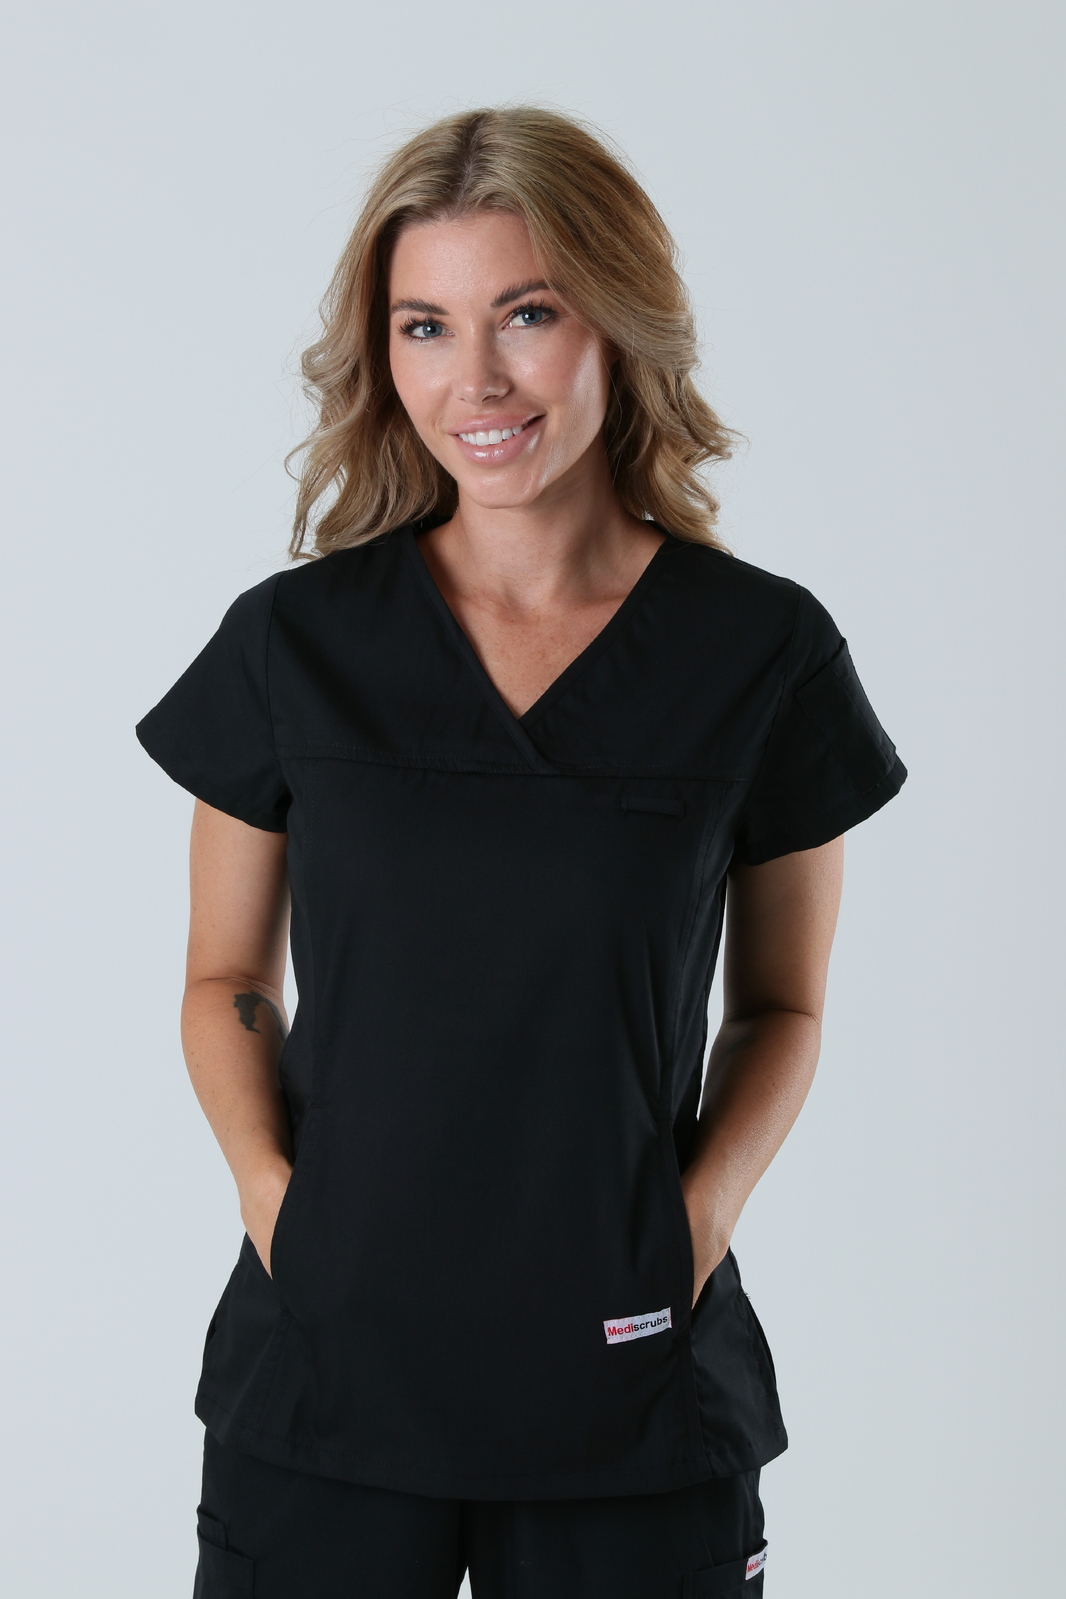 Queensland Children's Hospital Emergency Department Clinical Facilitator Uniform Top Bundle  (Women's Fit Top in Black incl Logos)